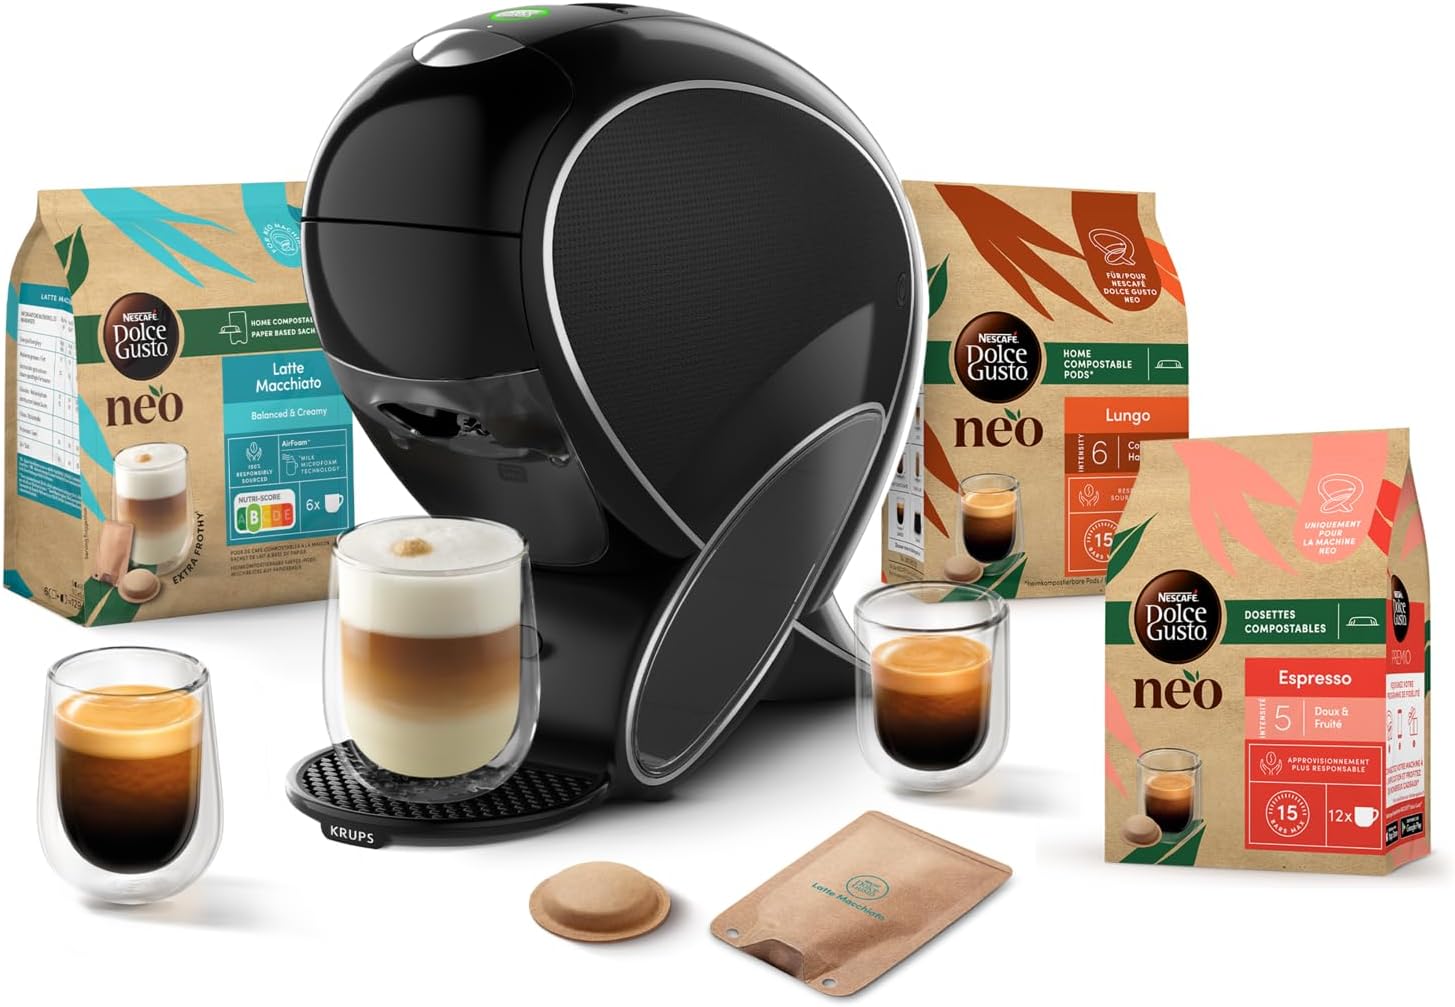 NEO Lungo : dosettes de café compostables